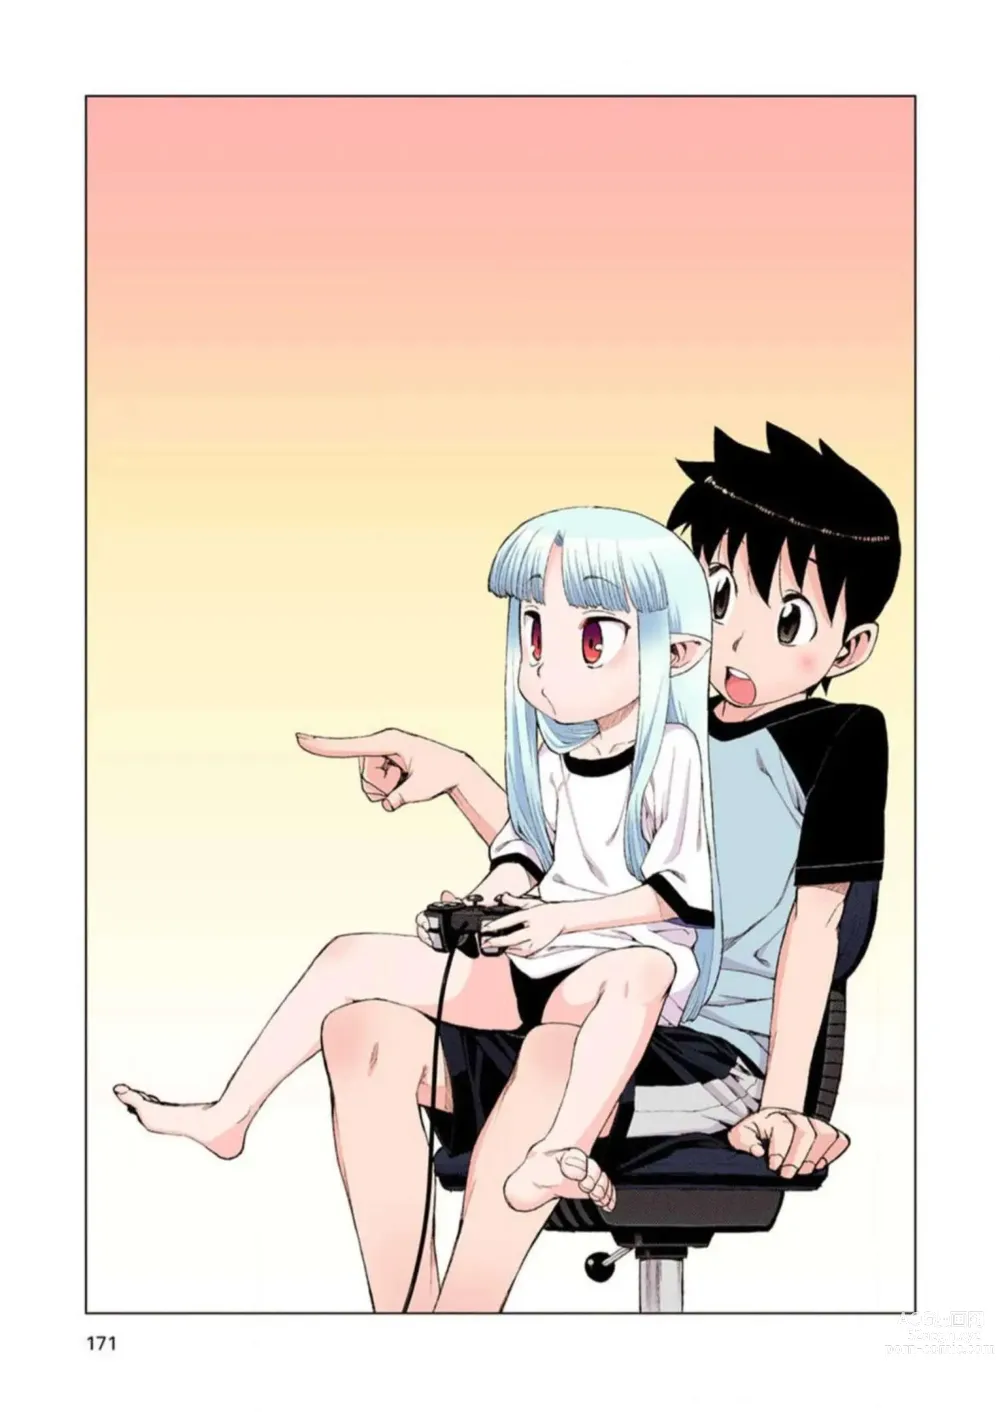 Page 171 of manga Tsugumomo Digital Colored Comics V2